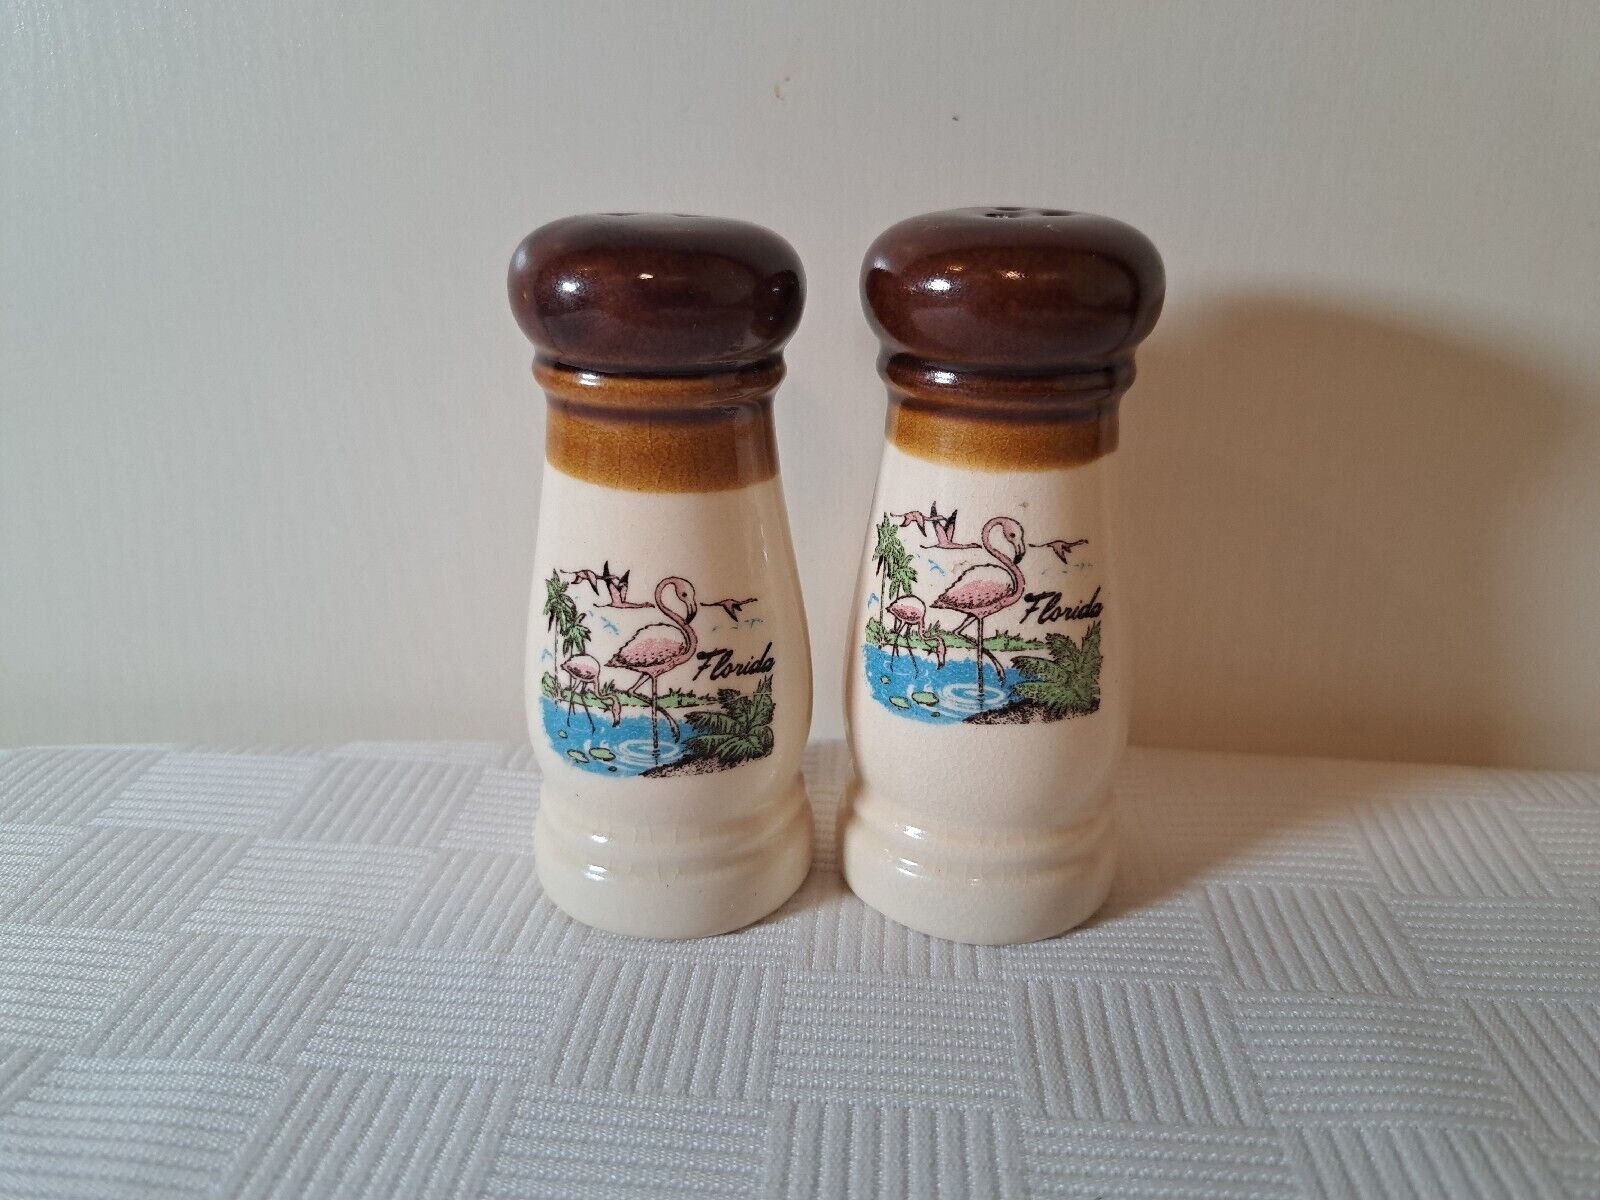 vintage salt and pepper shakers